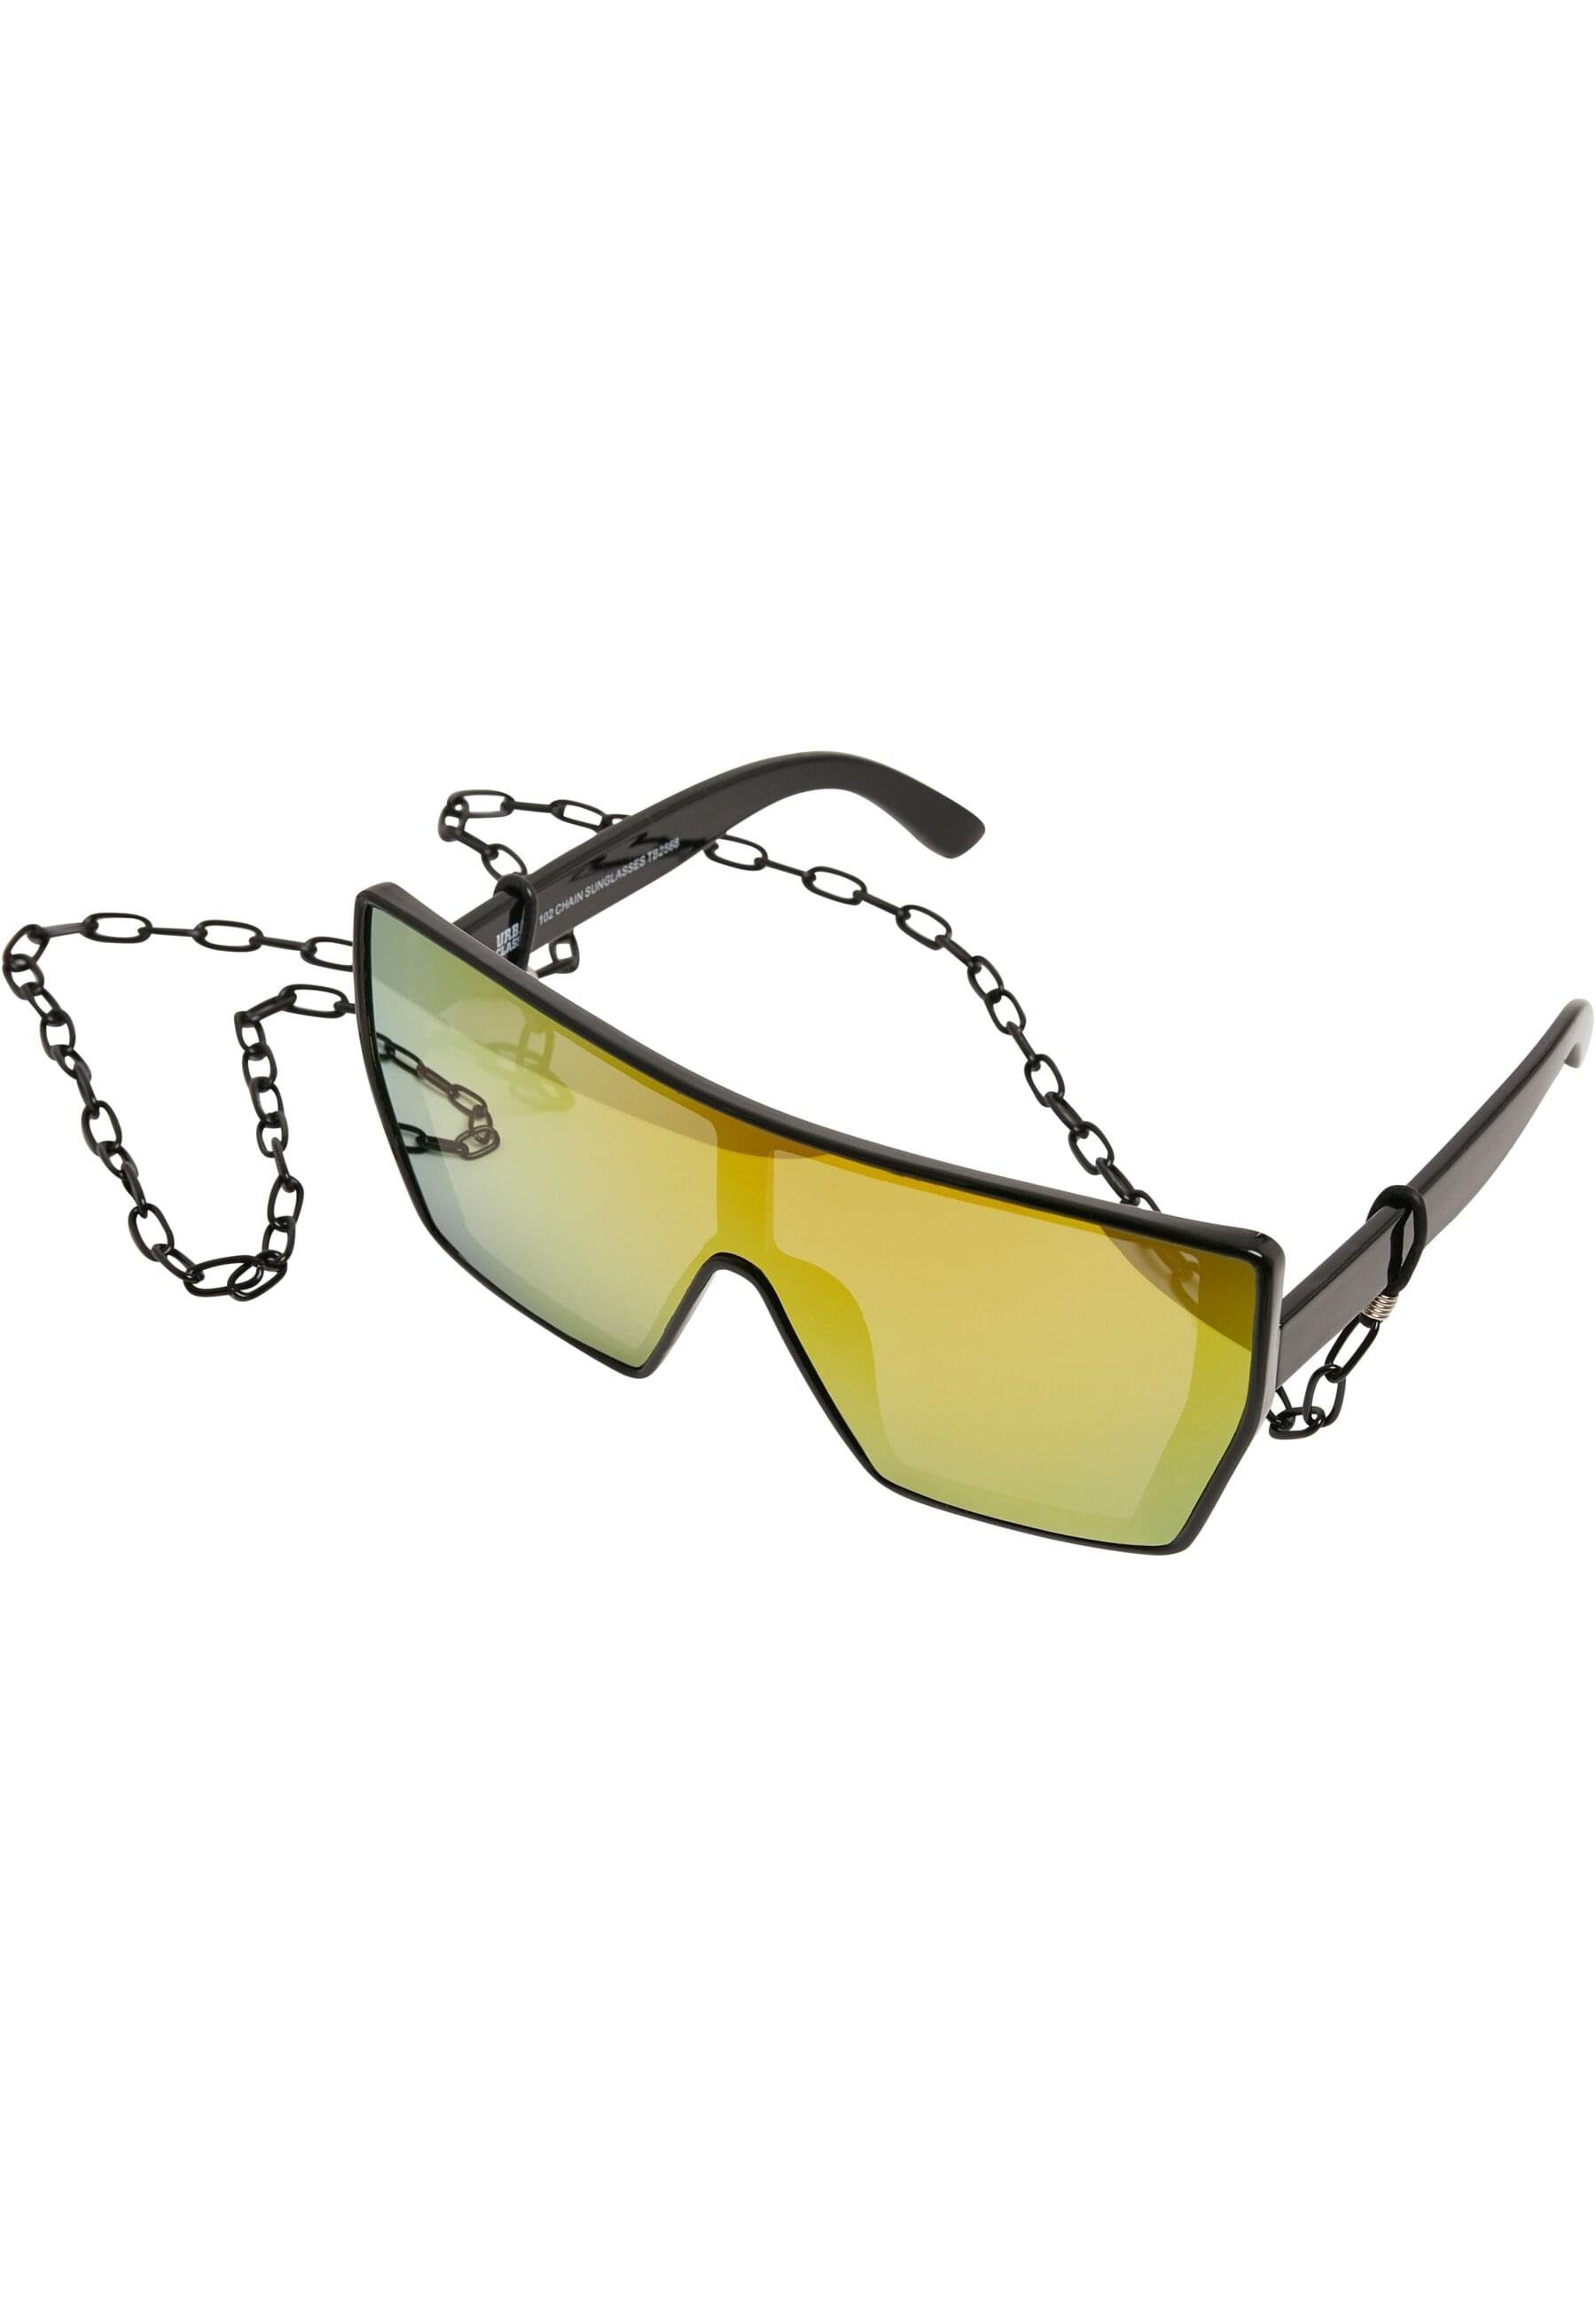 URBAN CLASSICS Sonnenbrille Unisex Sunglasses 102 102 blk/yellow Chain TB2568 Chain